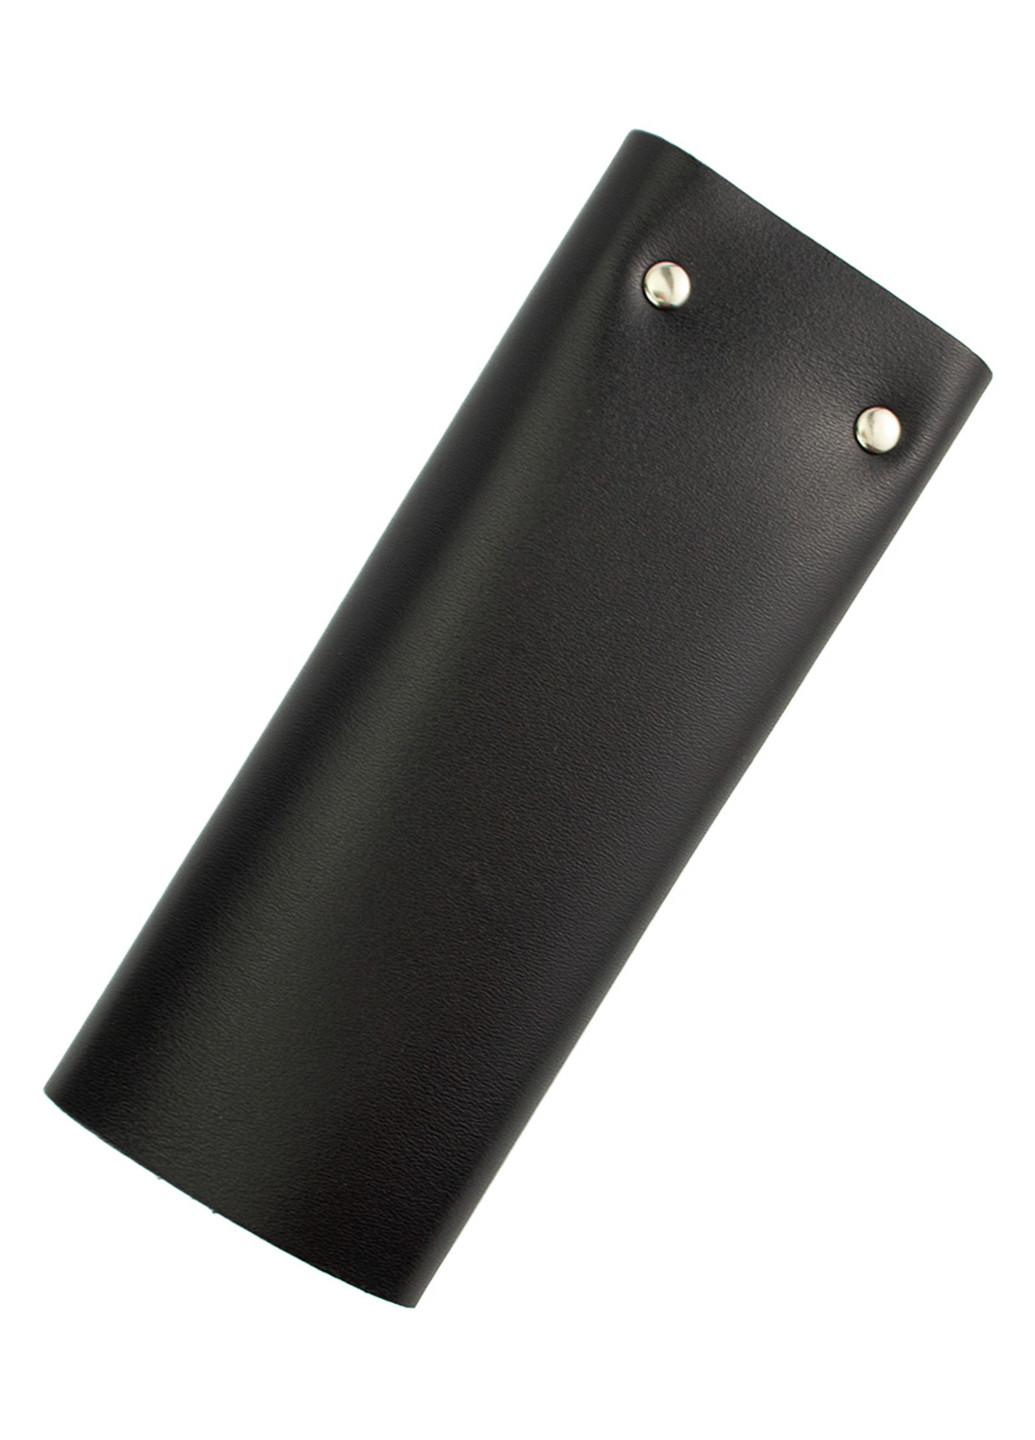 Ключница кожаная на кнопках с карабинами черная HC0077 black HandyCover (219035198)